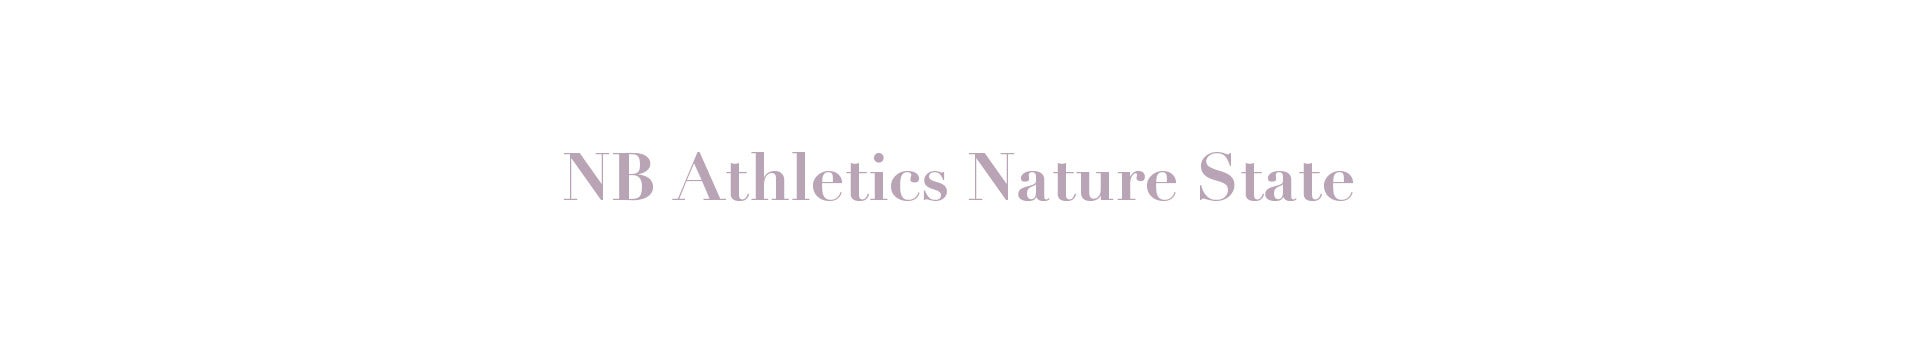 NB Athletics Nature State